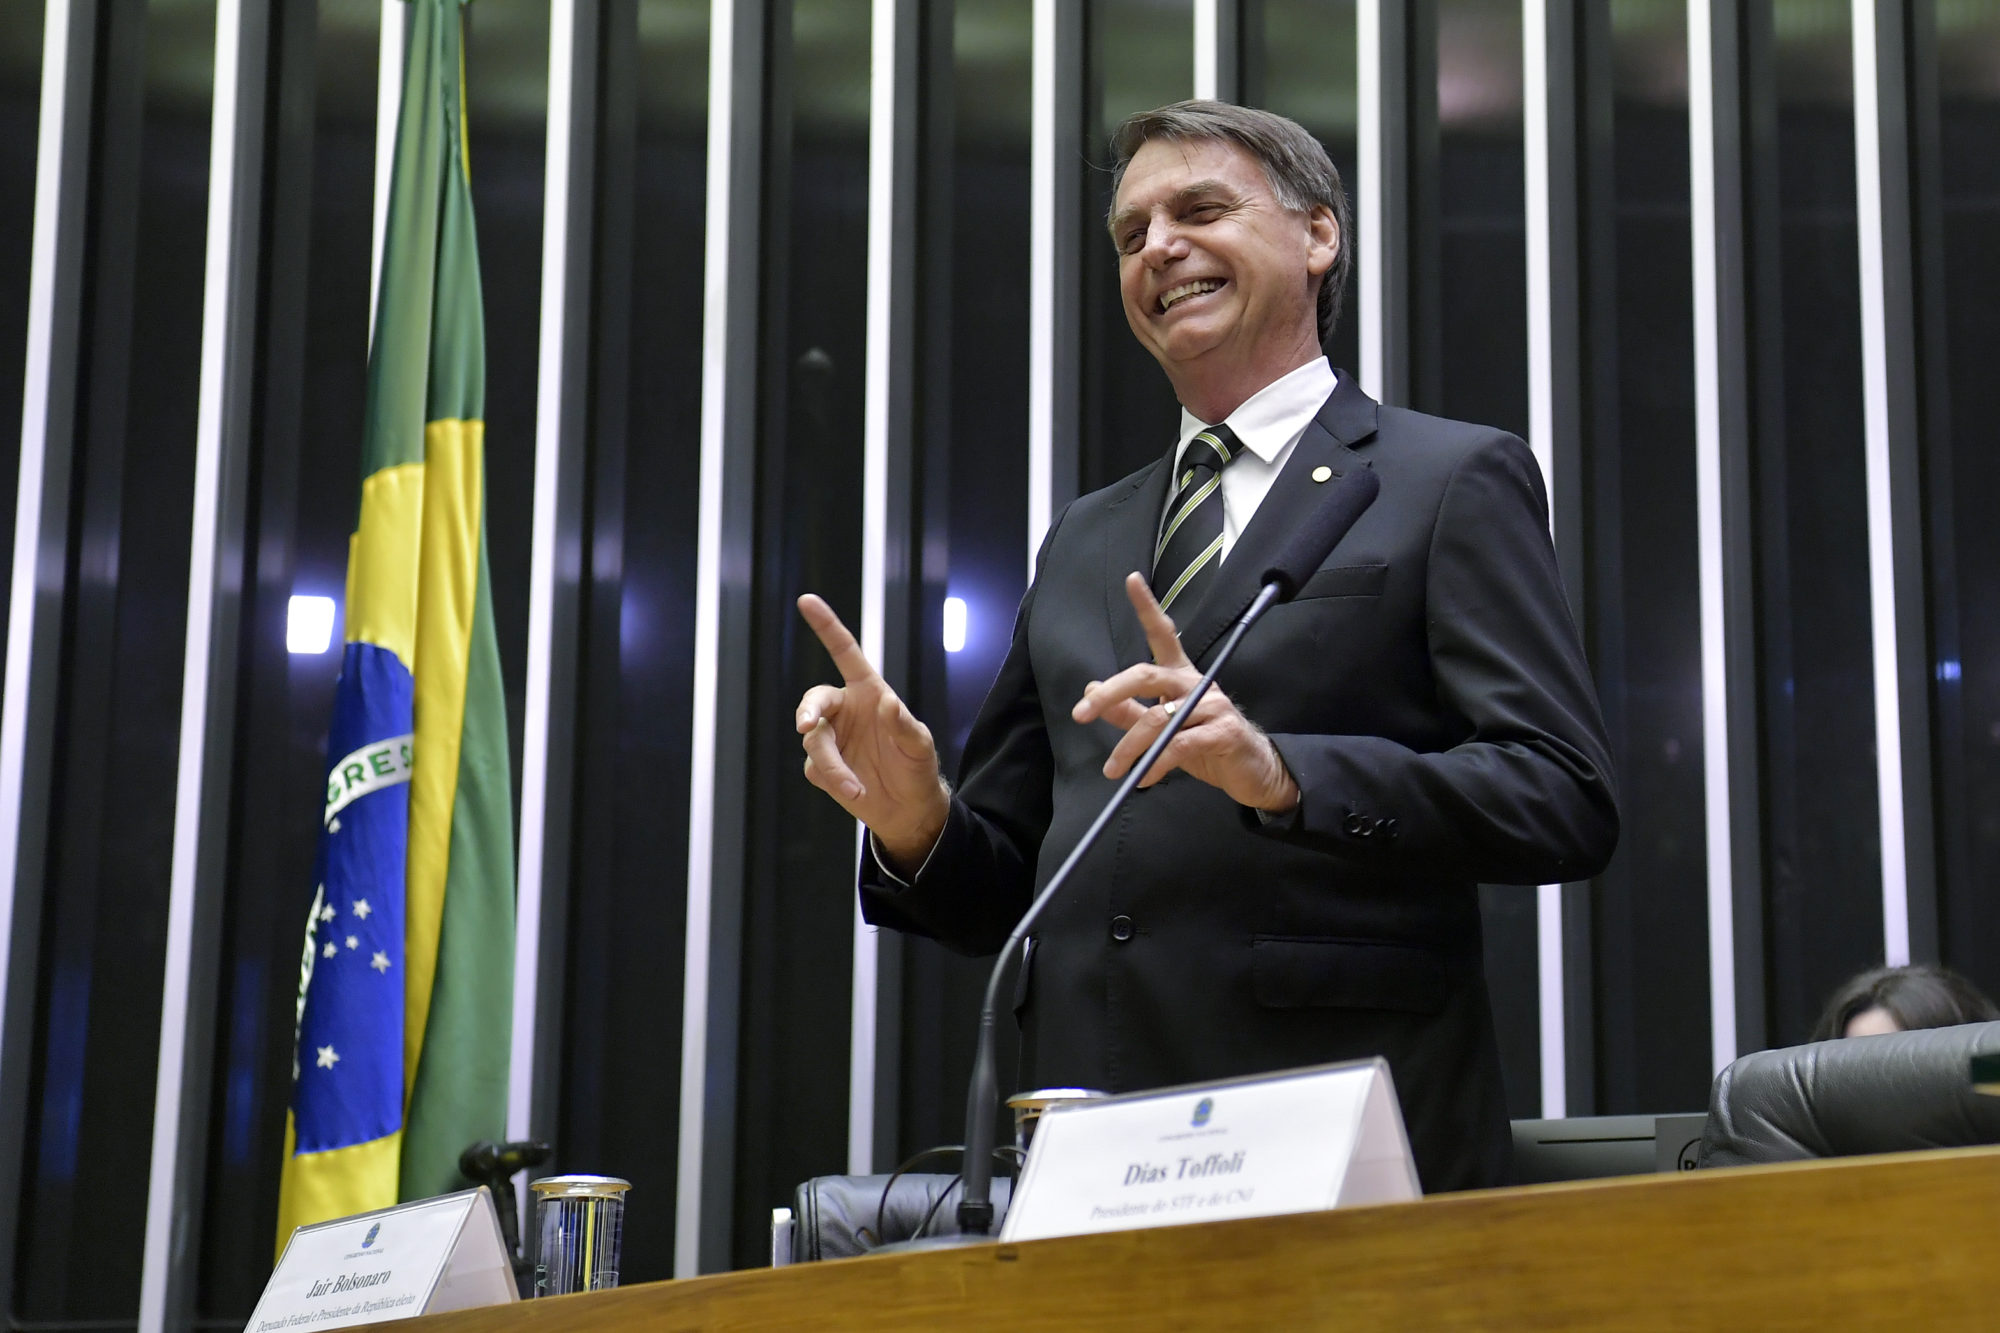 Trump, Bolsonaro, and the Future of US-Brazil Relations